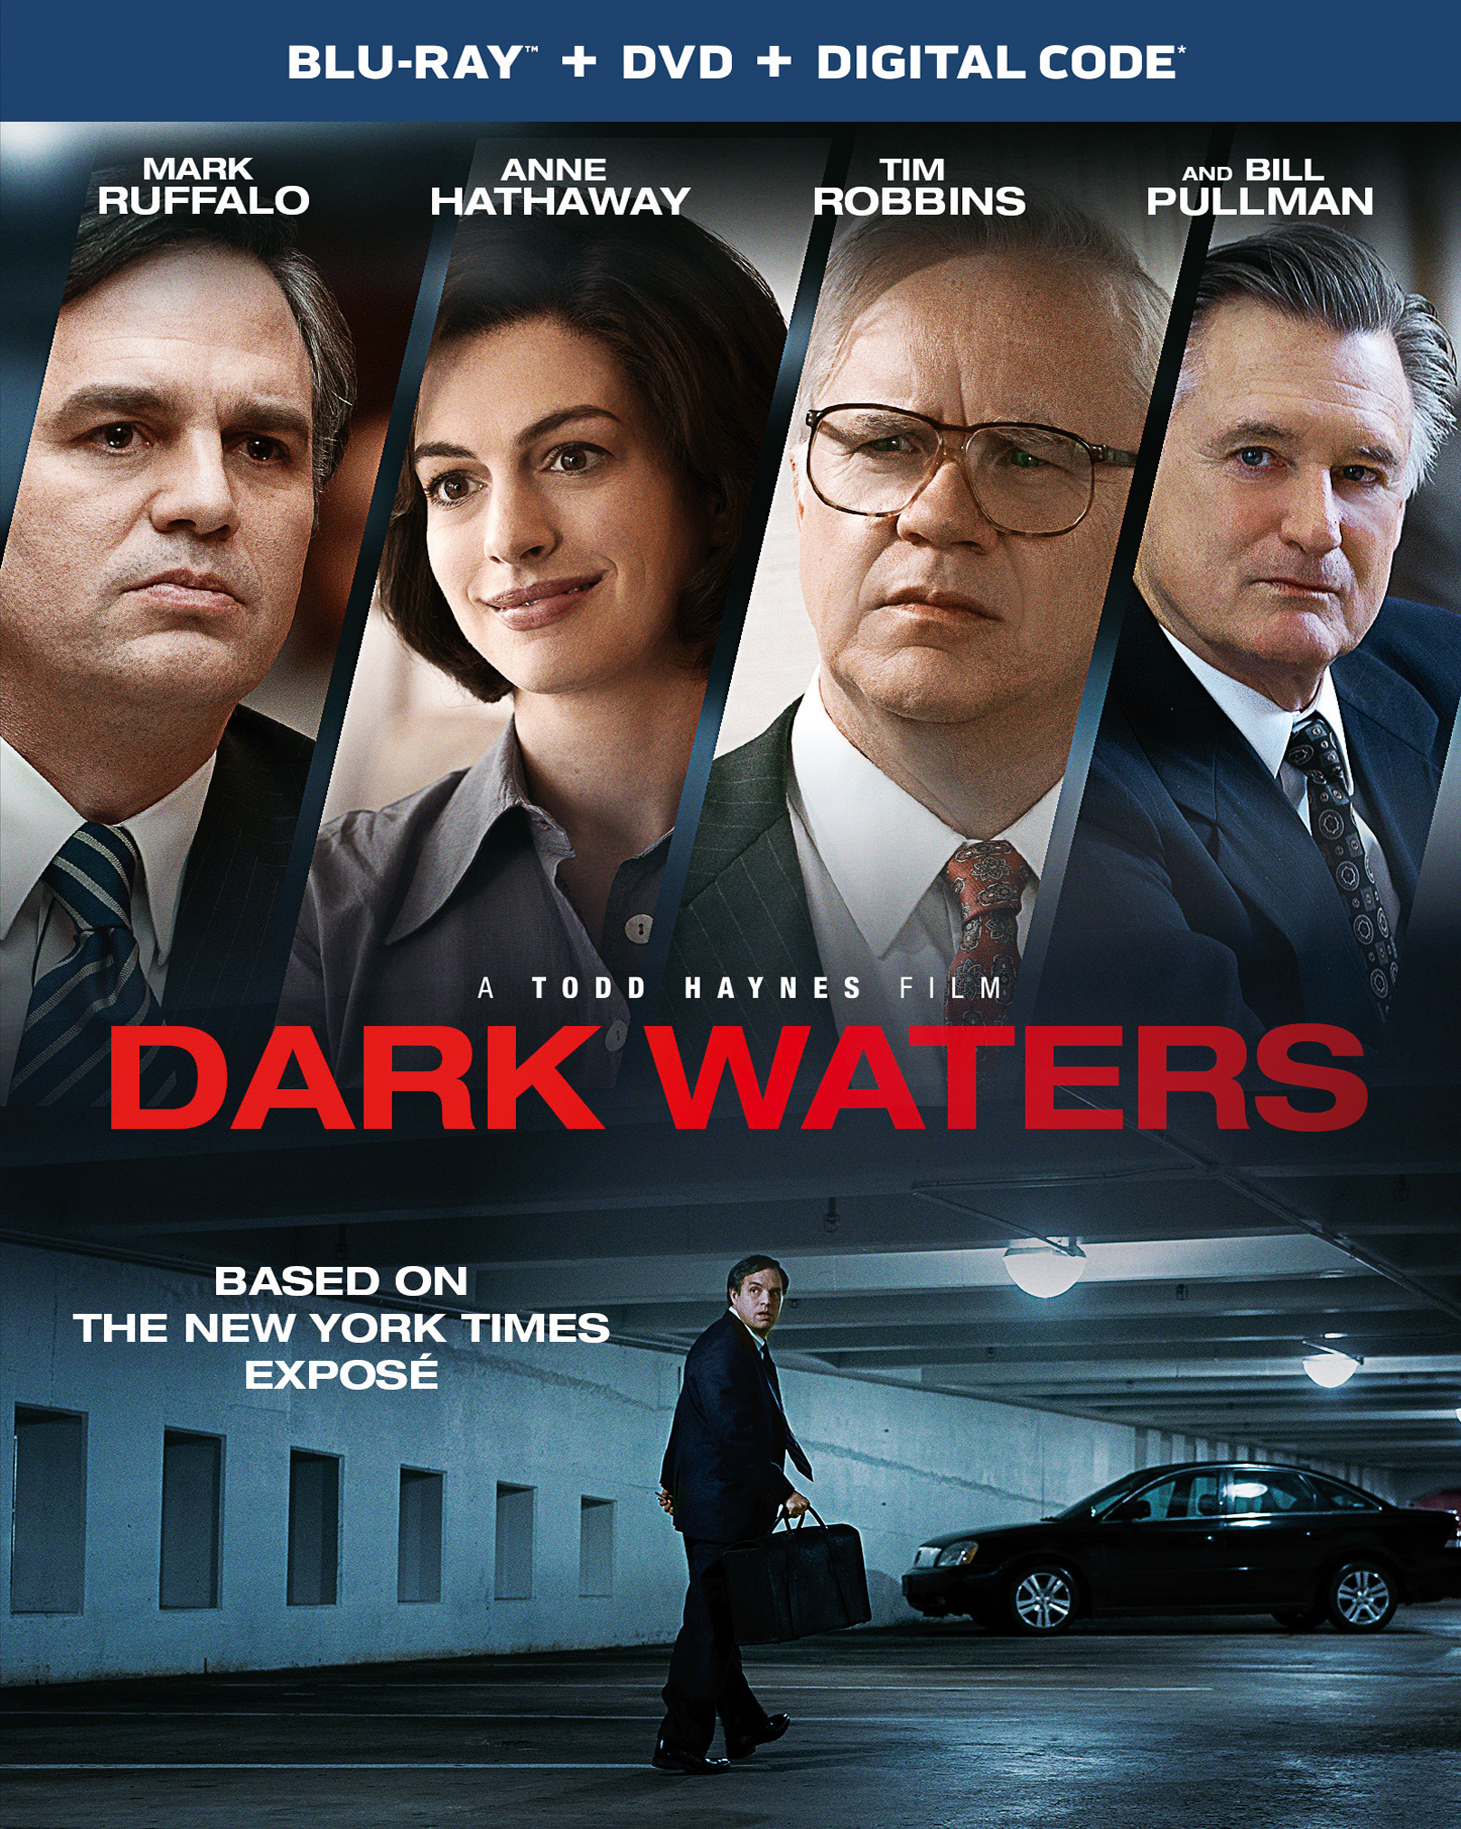 Dark waters [DVD] (2019).  Directed by Todd Haynes.